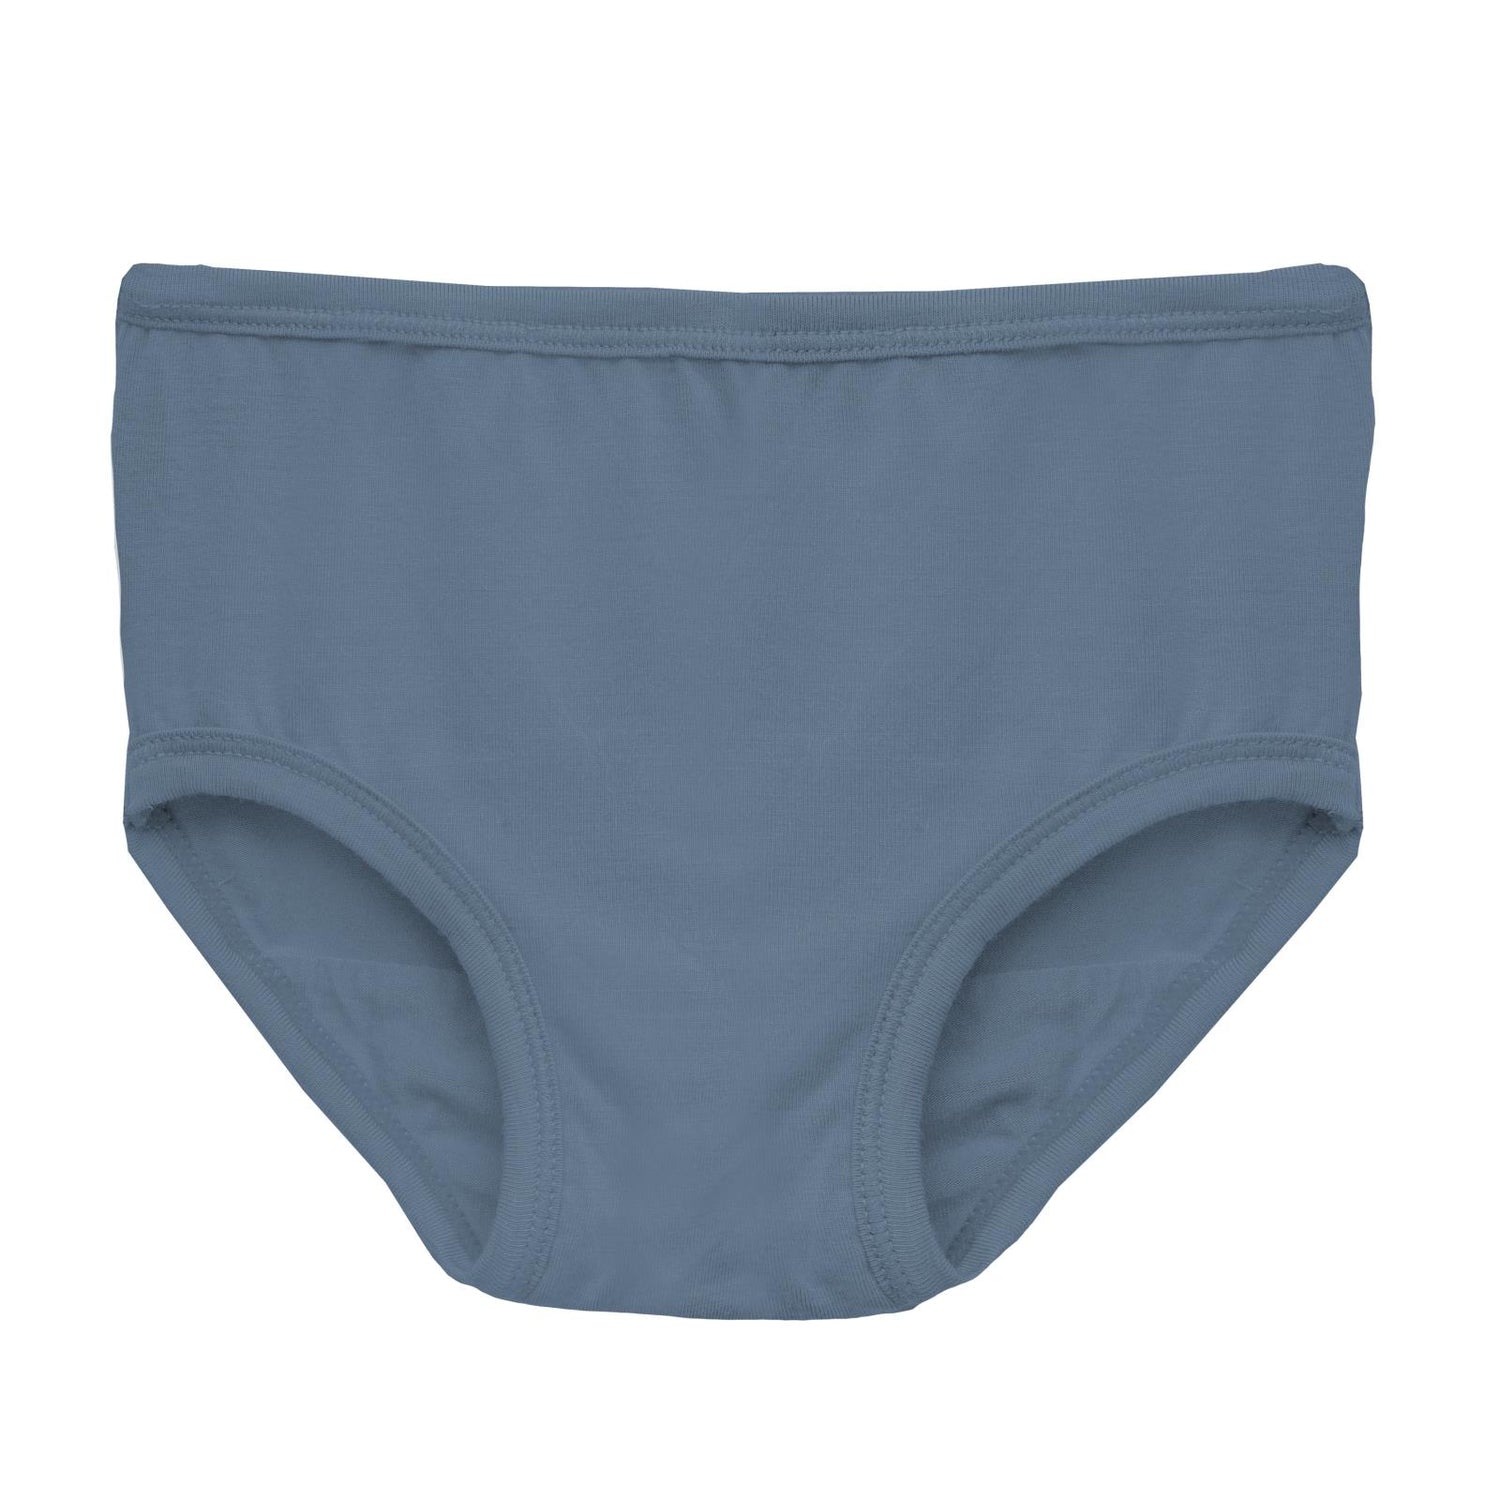 Print Girl's Underwear Set of 3 in Winter Ice, Parisian Blue & Baby Rose Happy Gumdrops